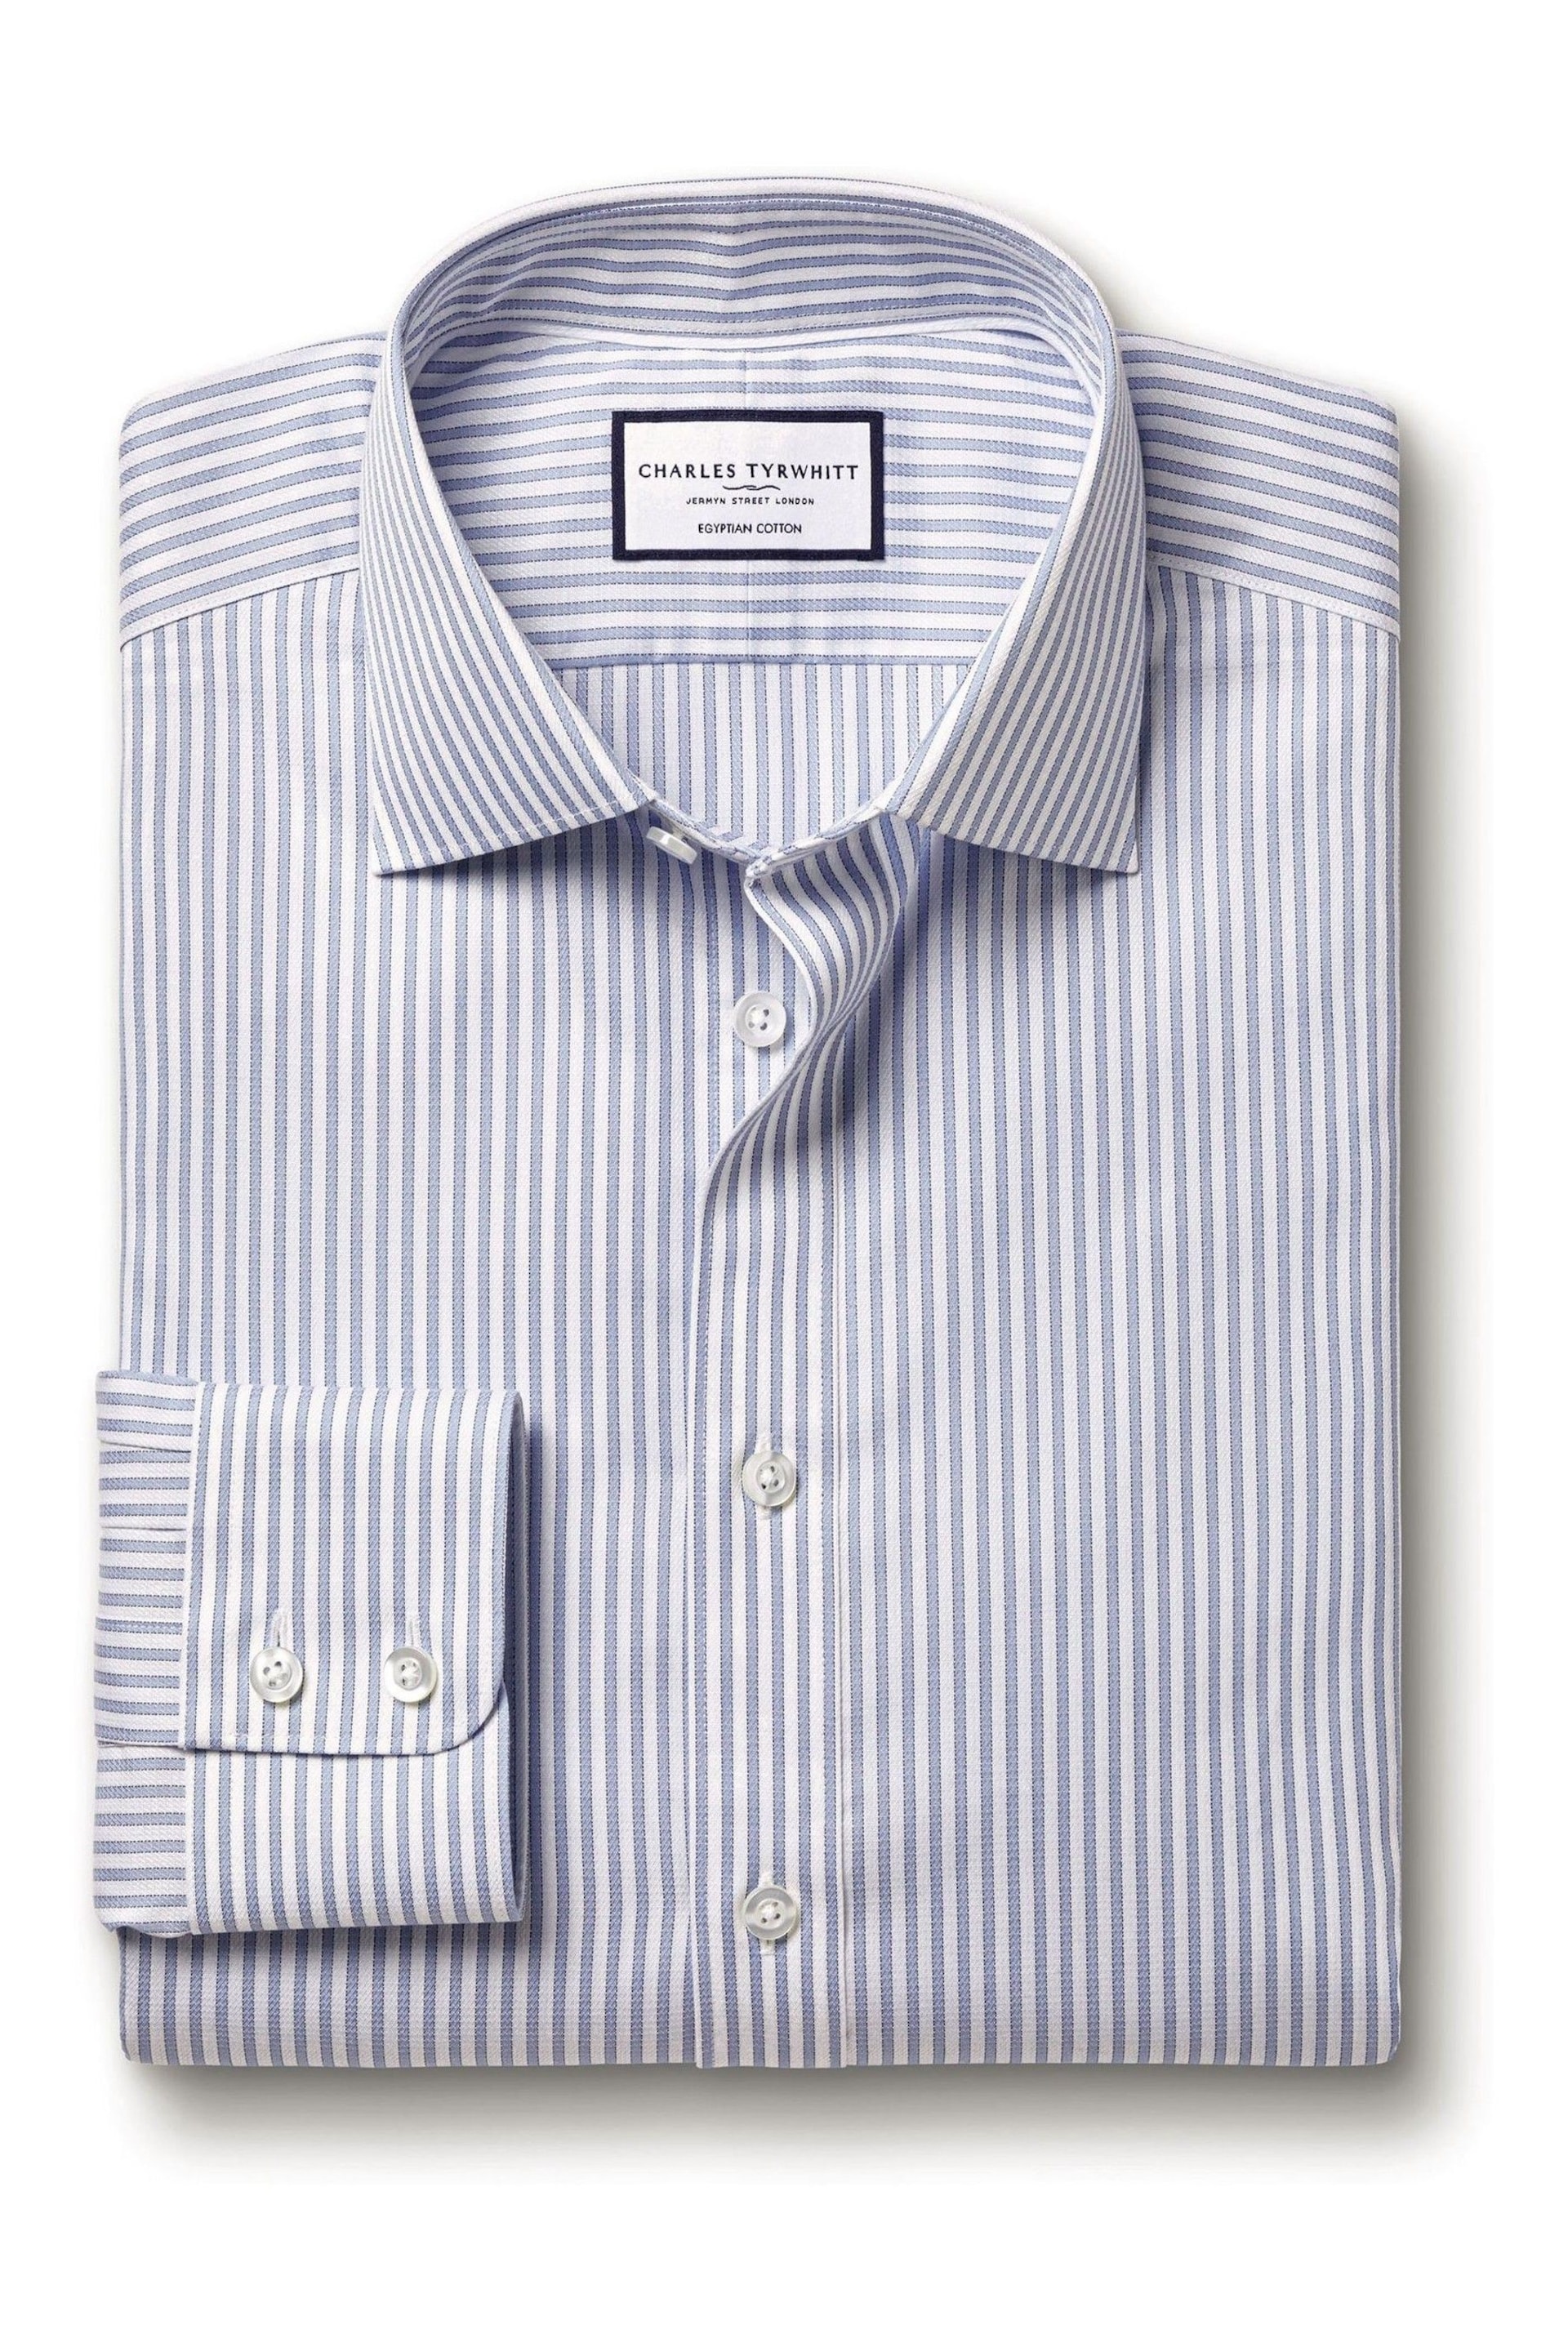 Charles Tyrwhitt Blue Stripe Egyptian Cotton Slim Fit Shirt - Image 4 of 6